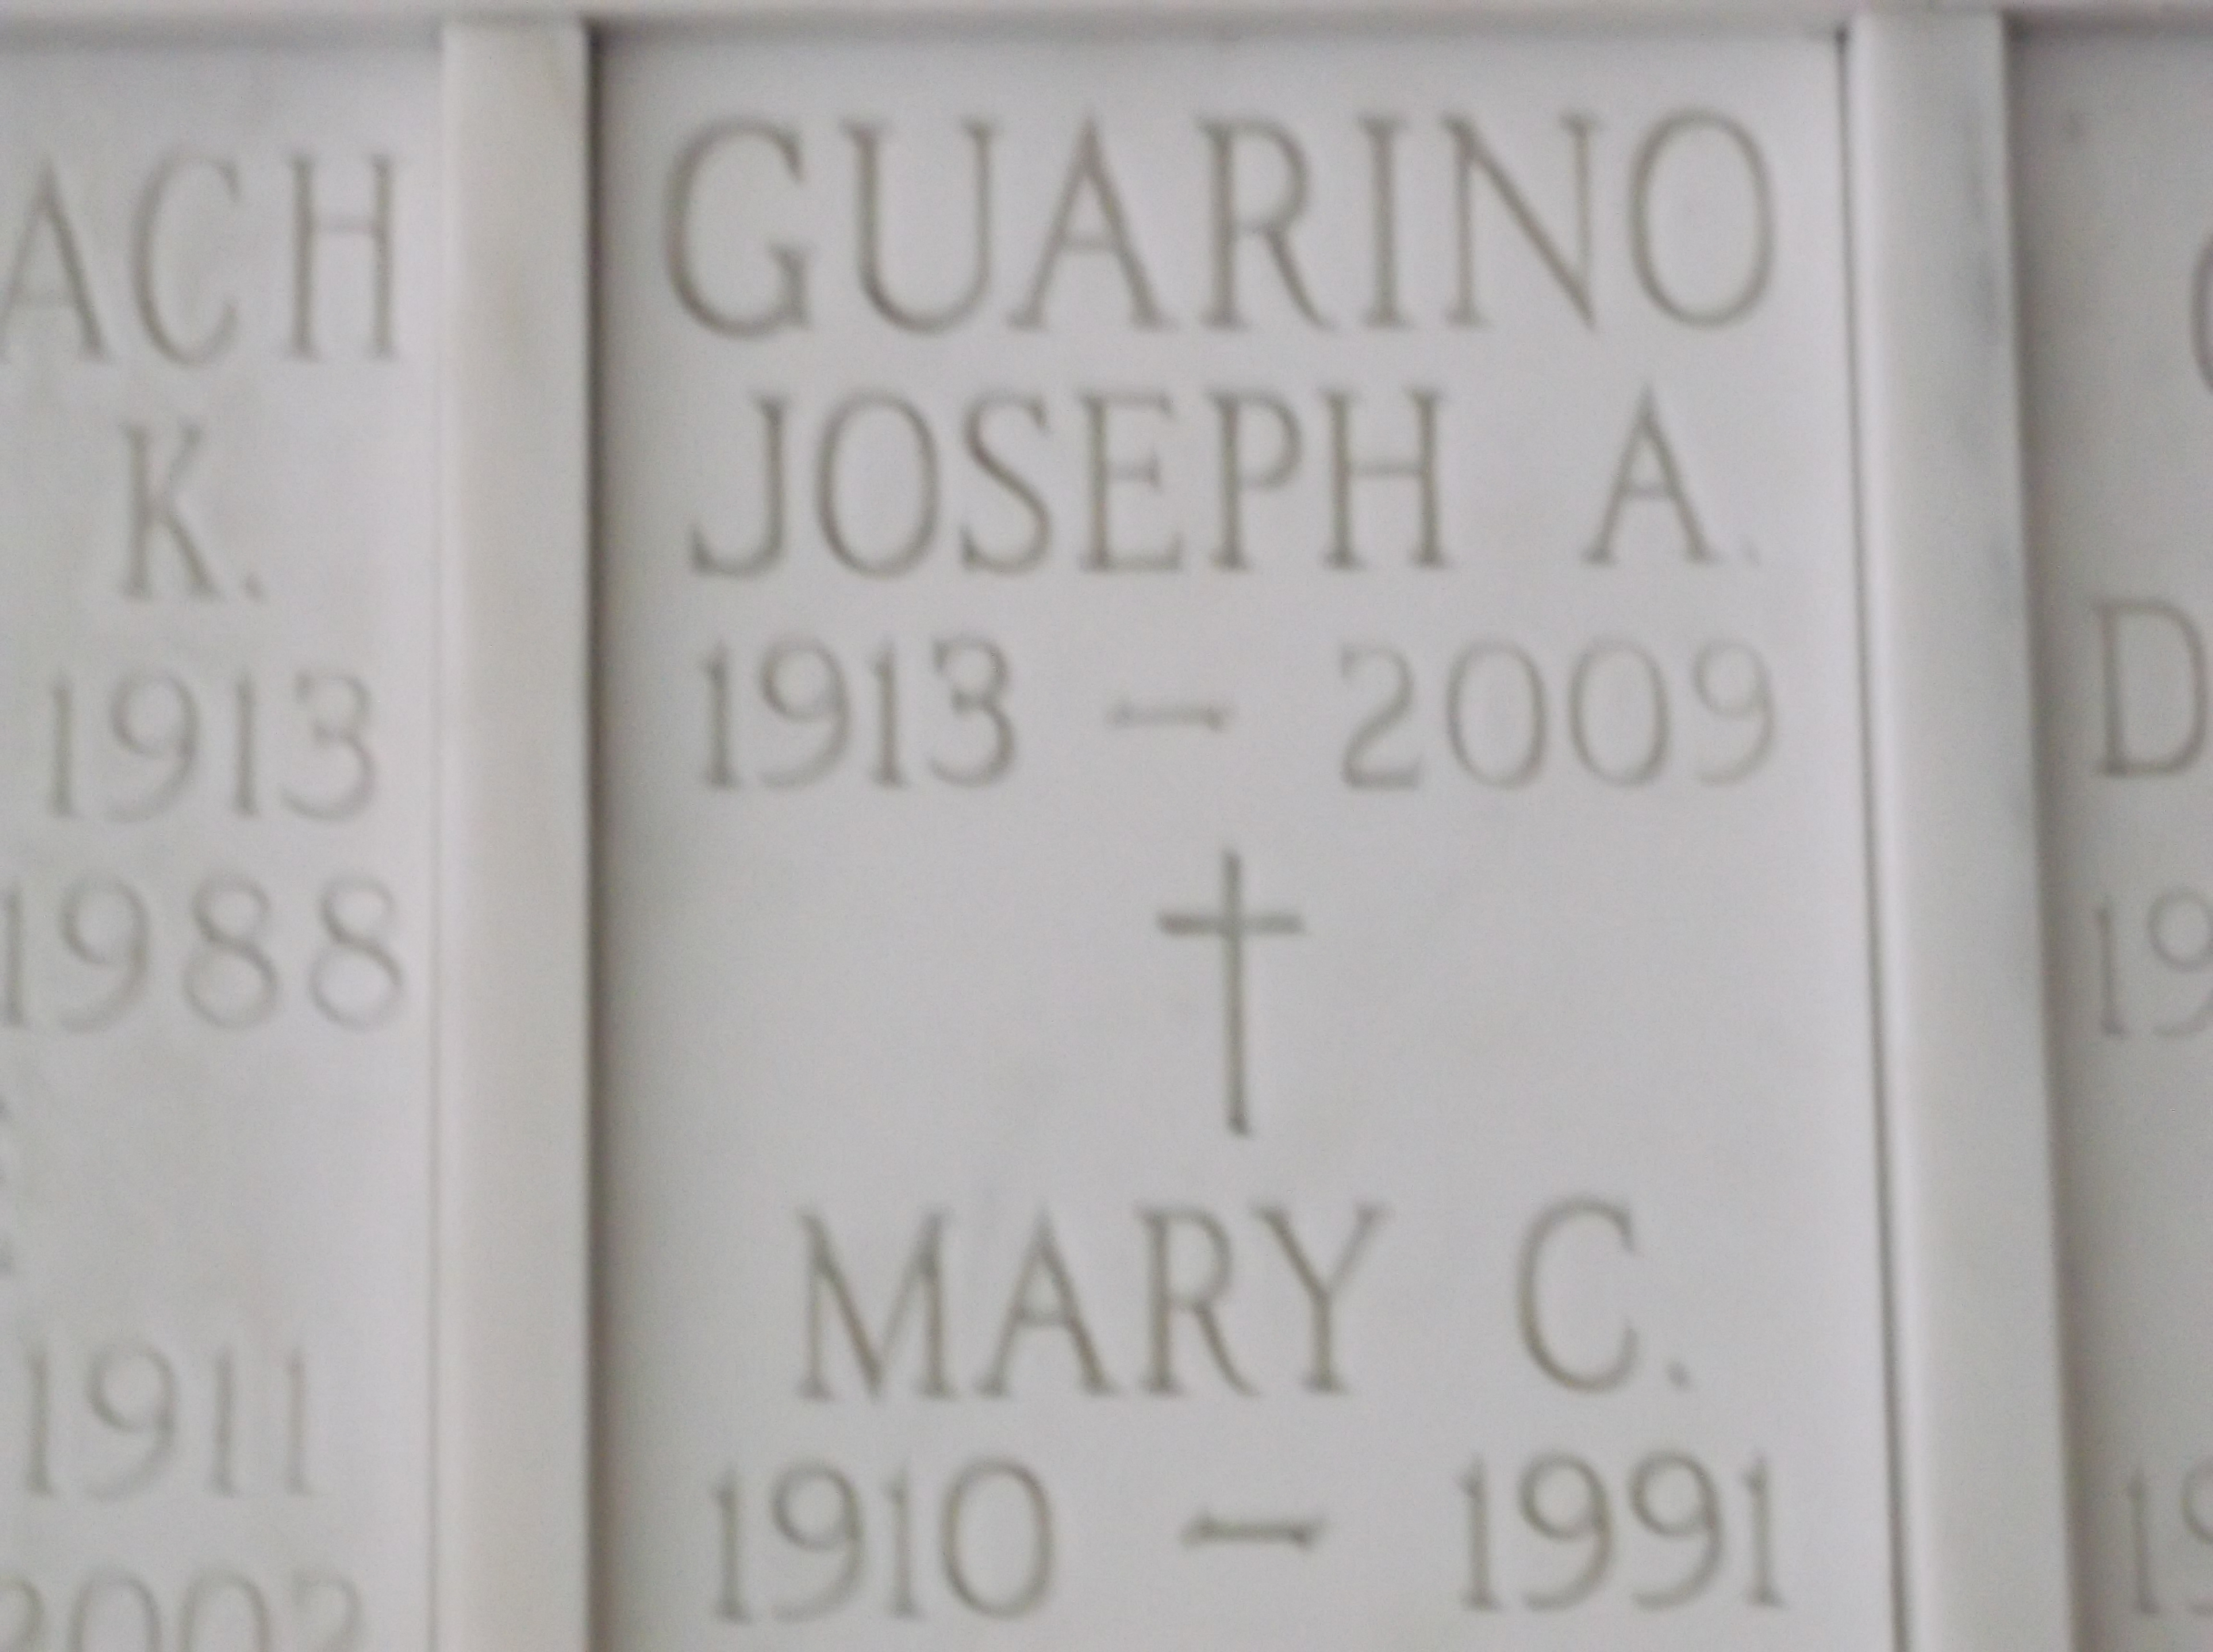 Joseph A Guarino